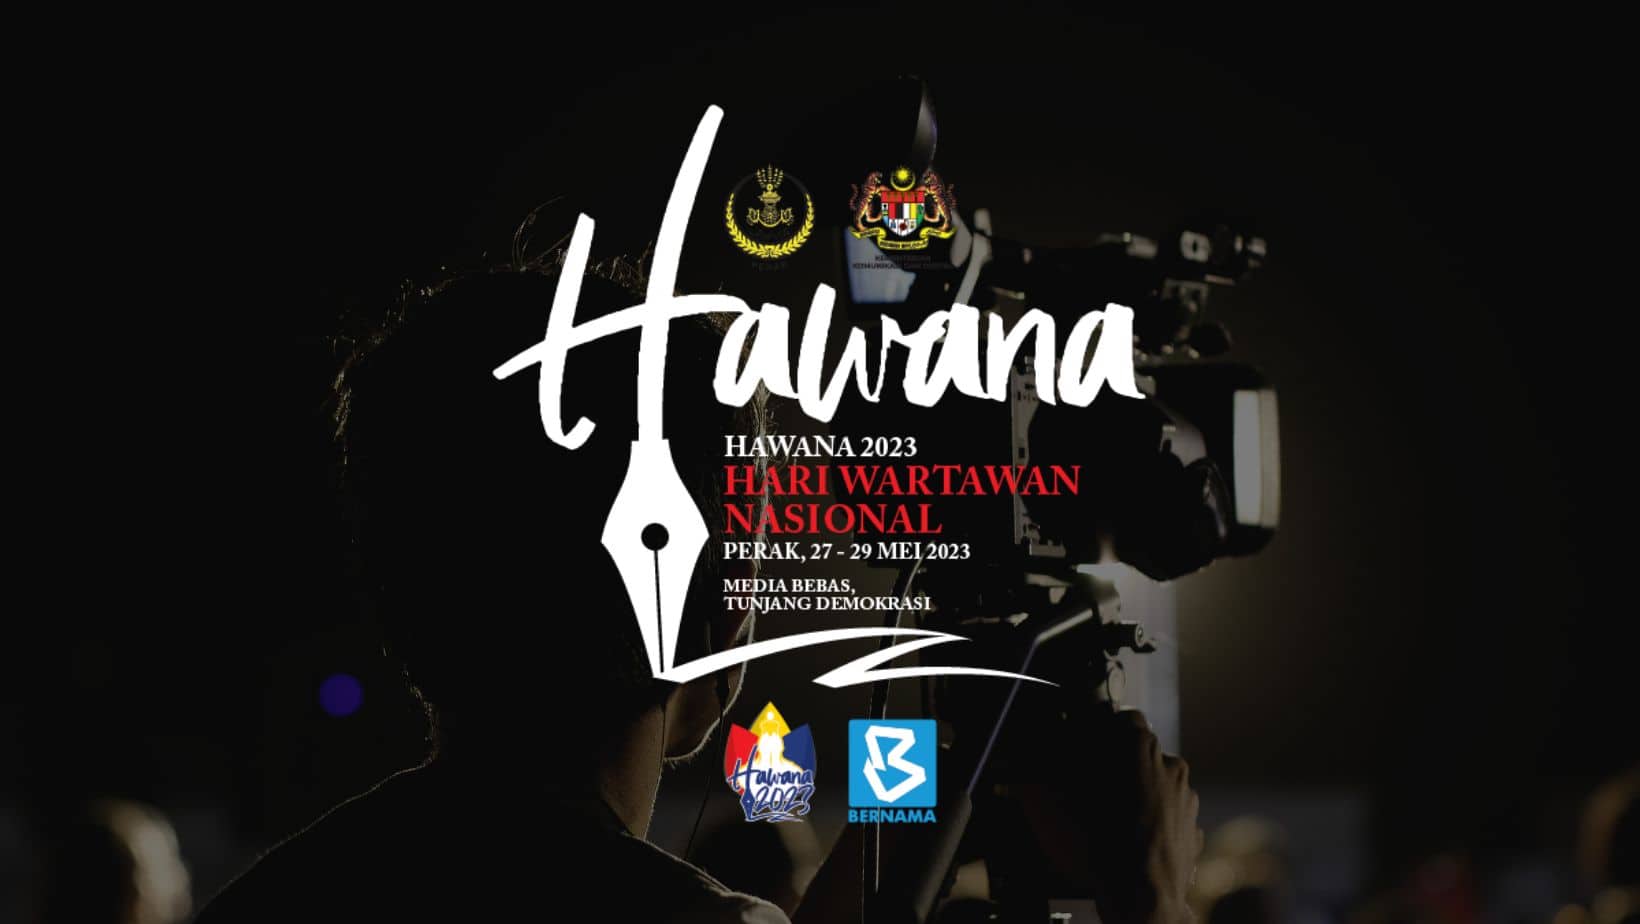 Hari Wartawan Nasional 2023 - HAWANA